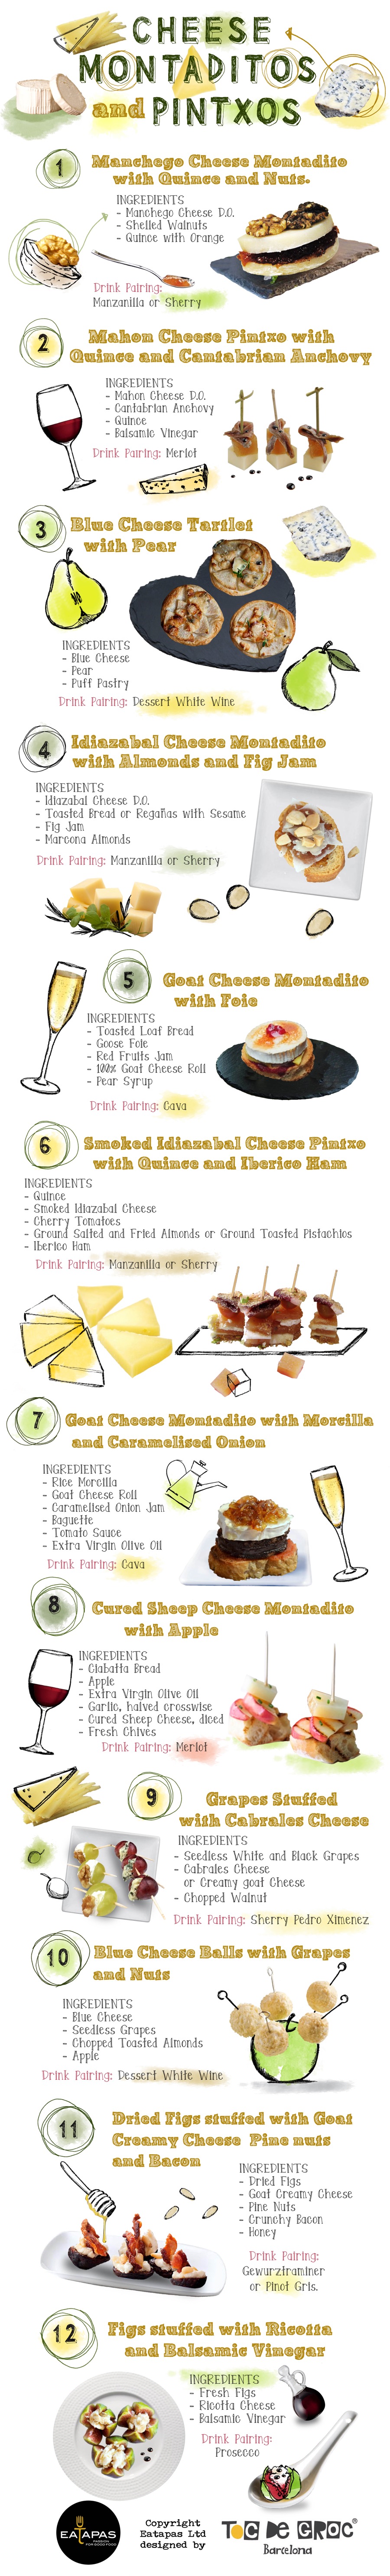 Cheese Montaditos and Pintxos